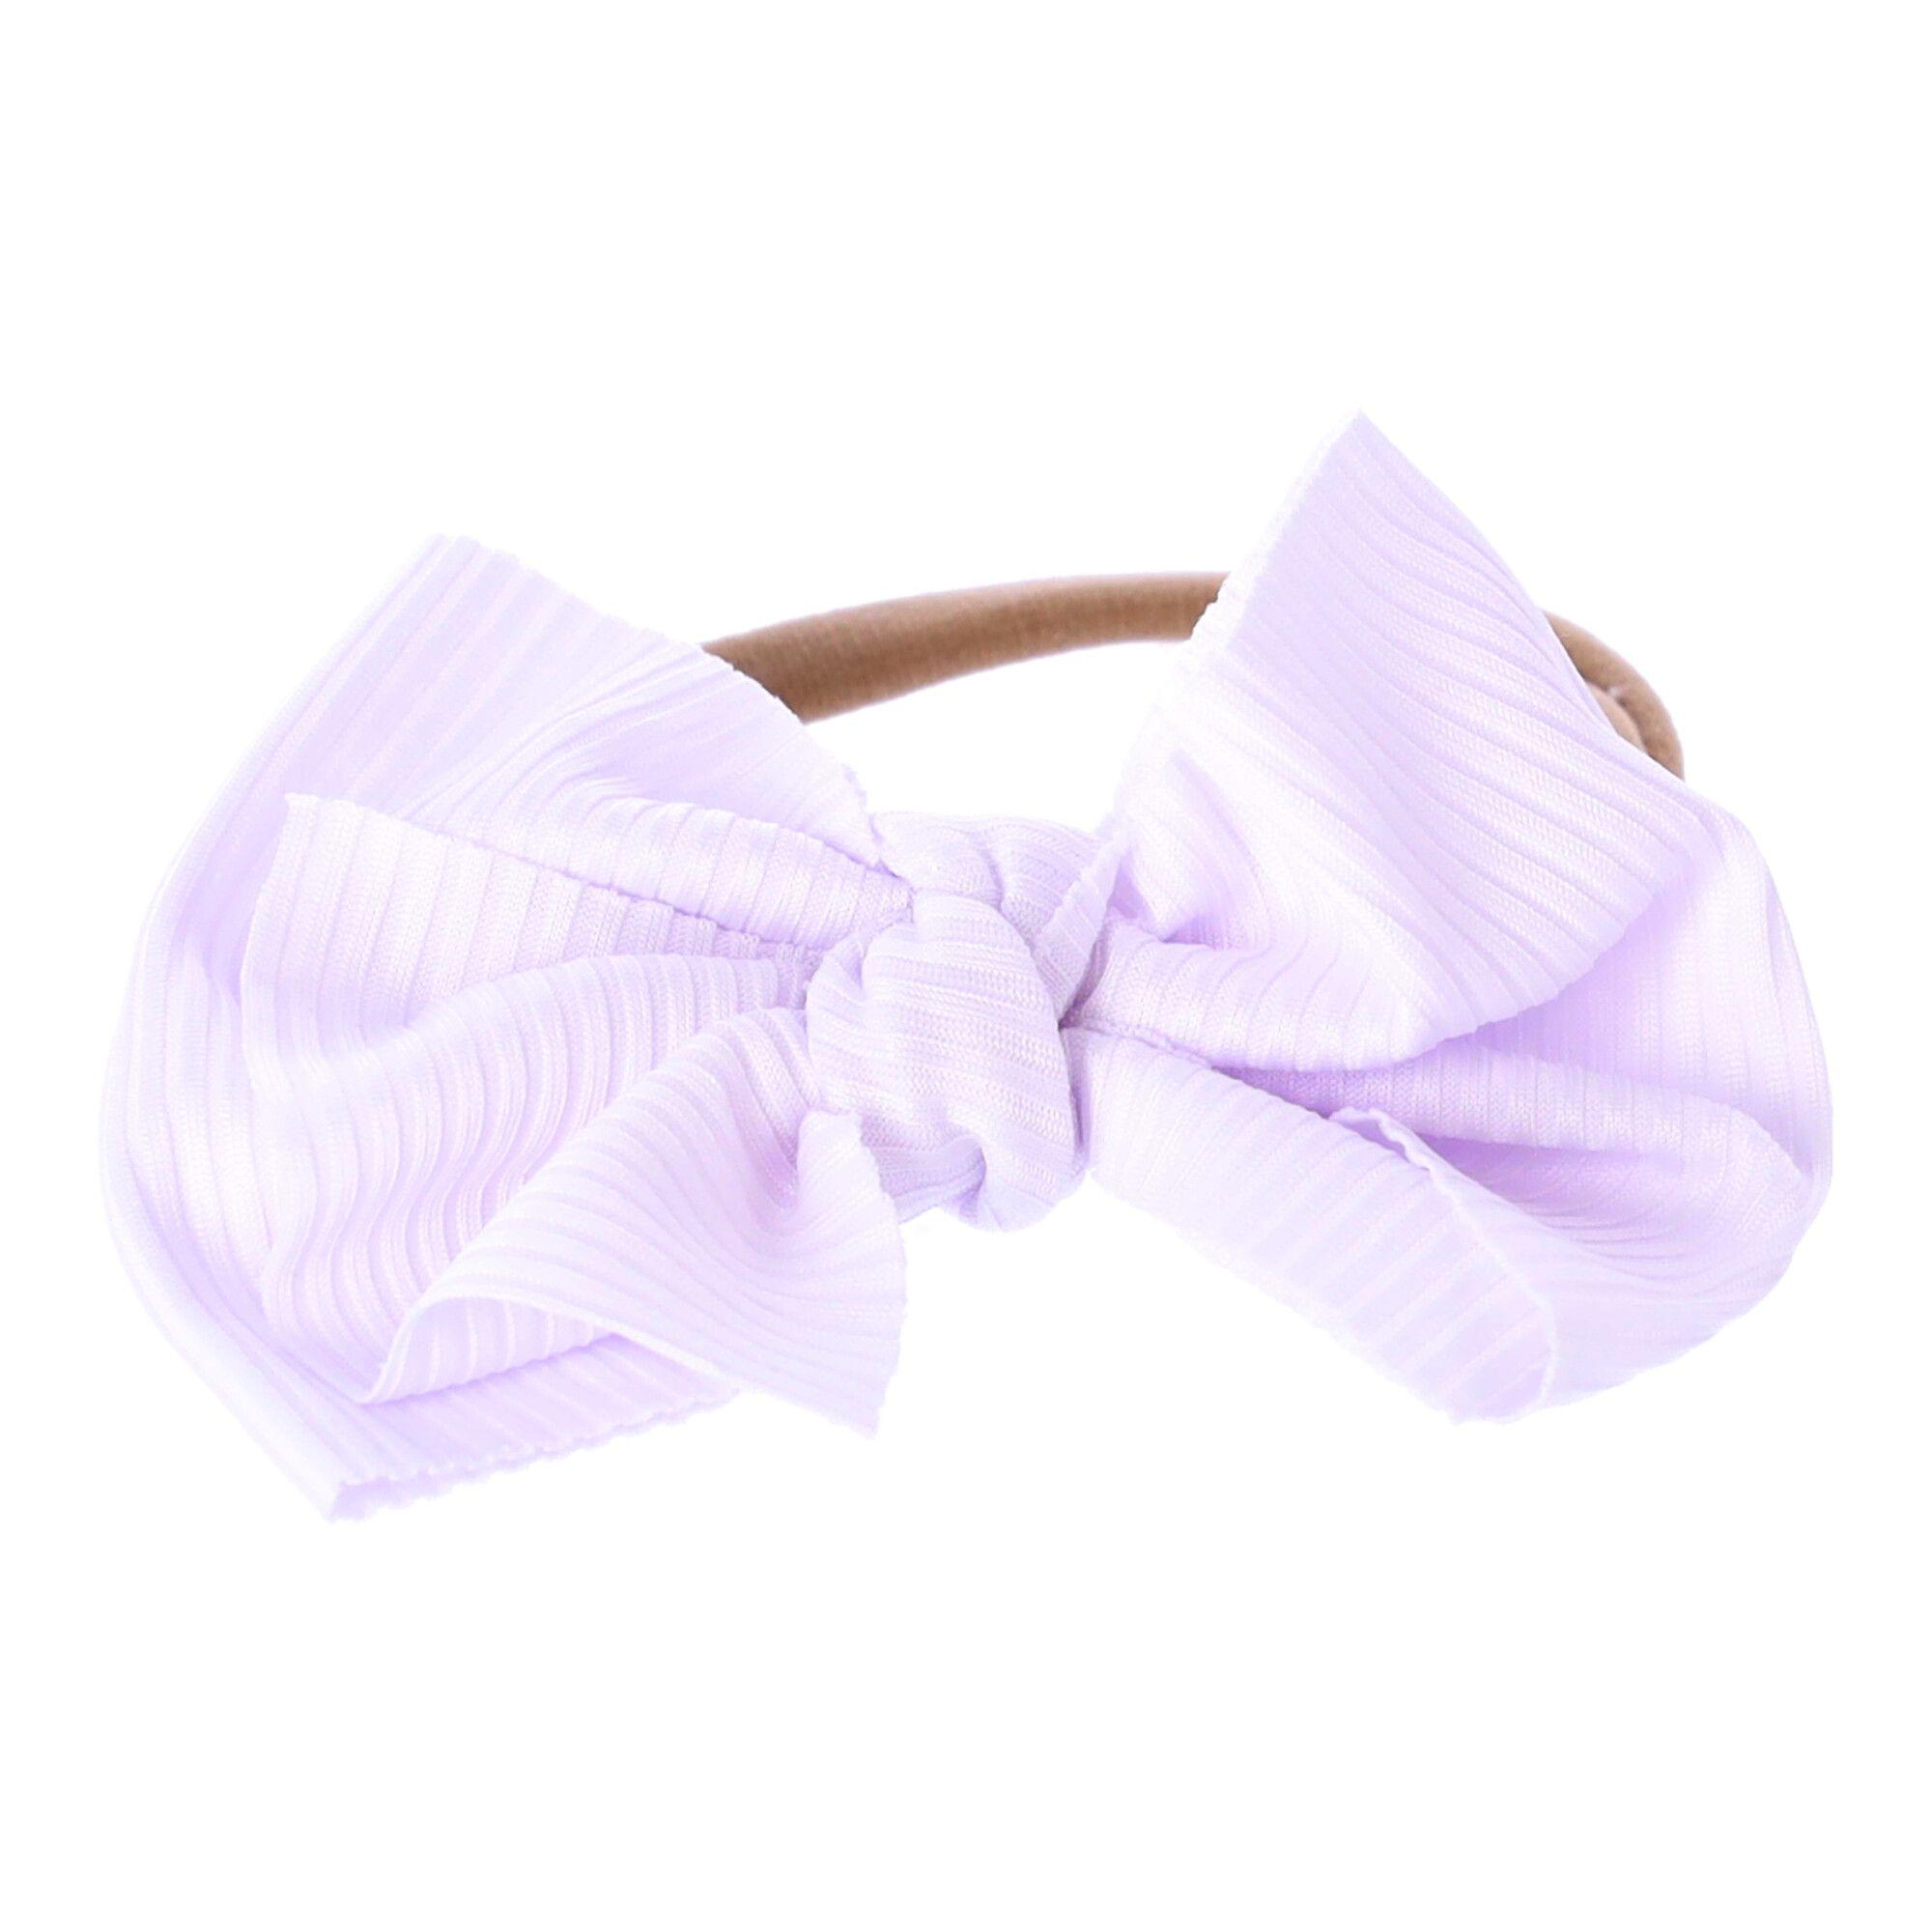 Baby headband with a bow - light purple